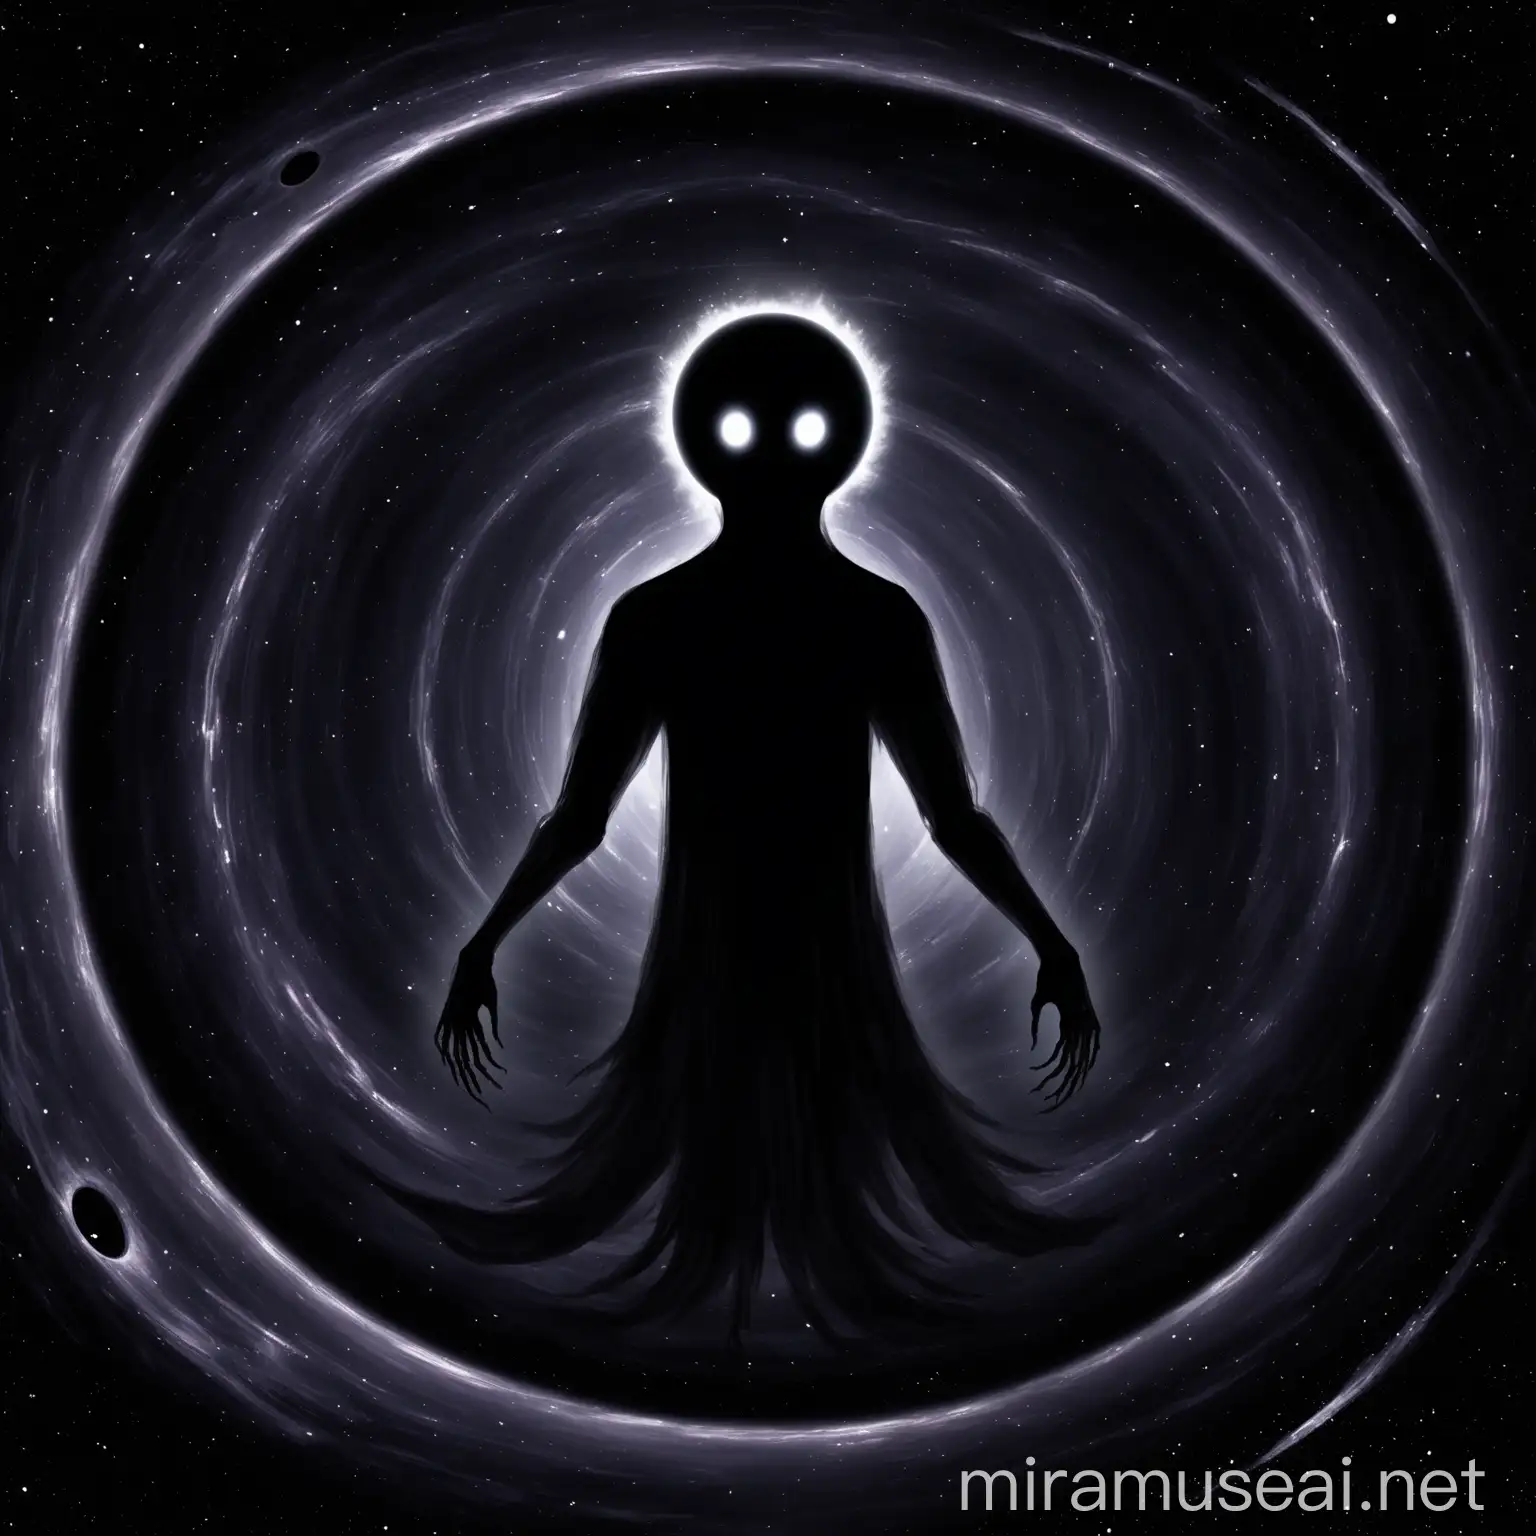 A totally black dark galactic shadow spirit fantasy with a blackhole head